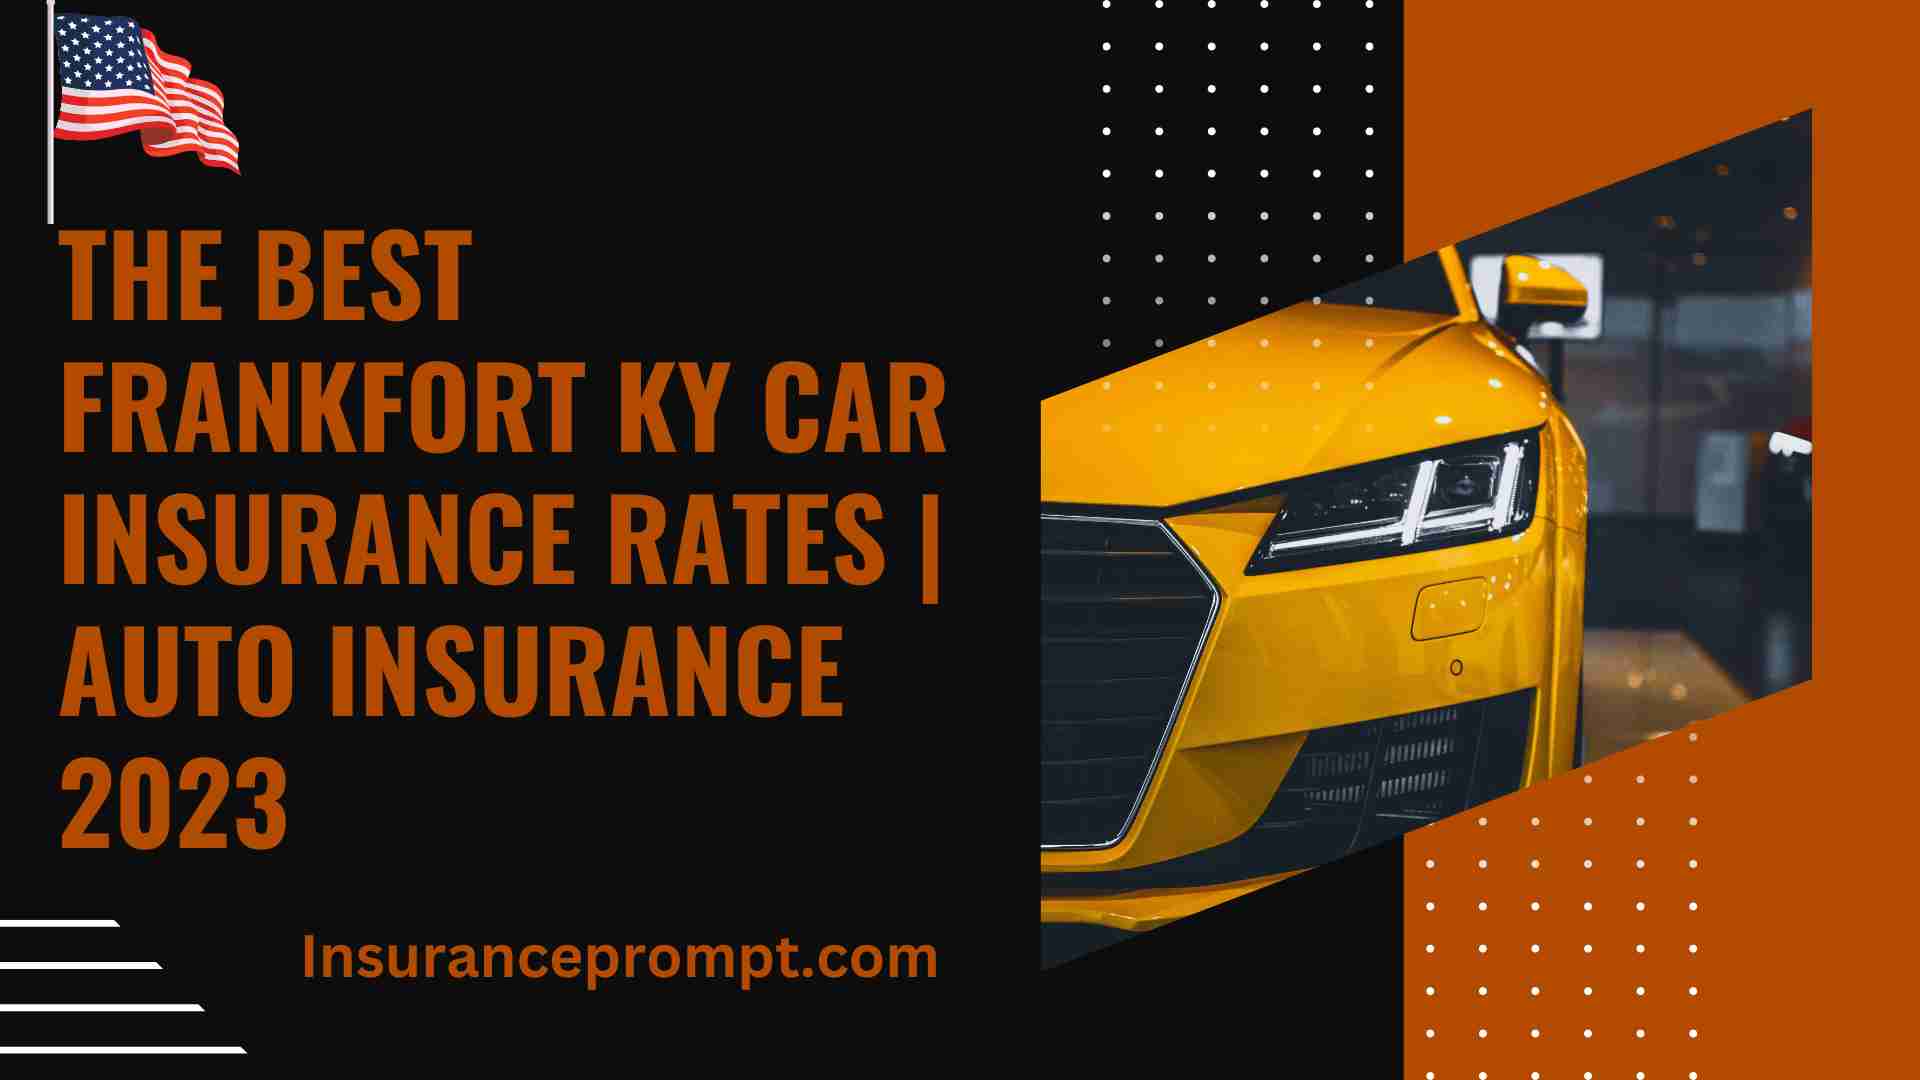 Best Frankfort KY Car Insurance Rates, Auto Insurance 2023